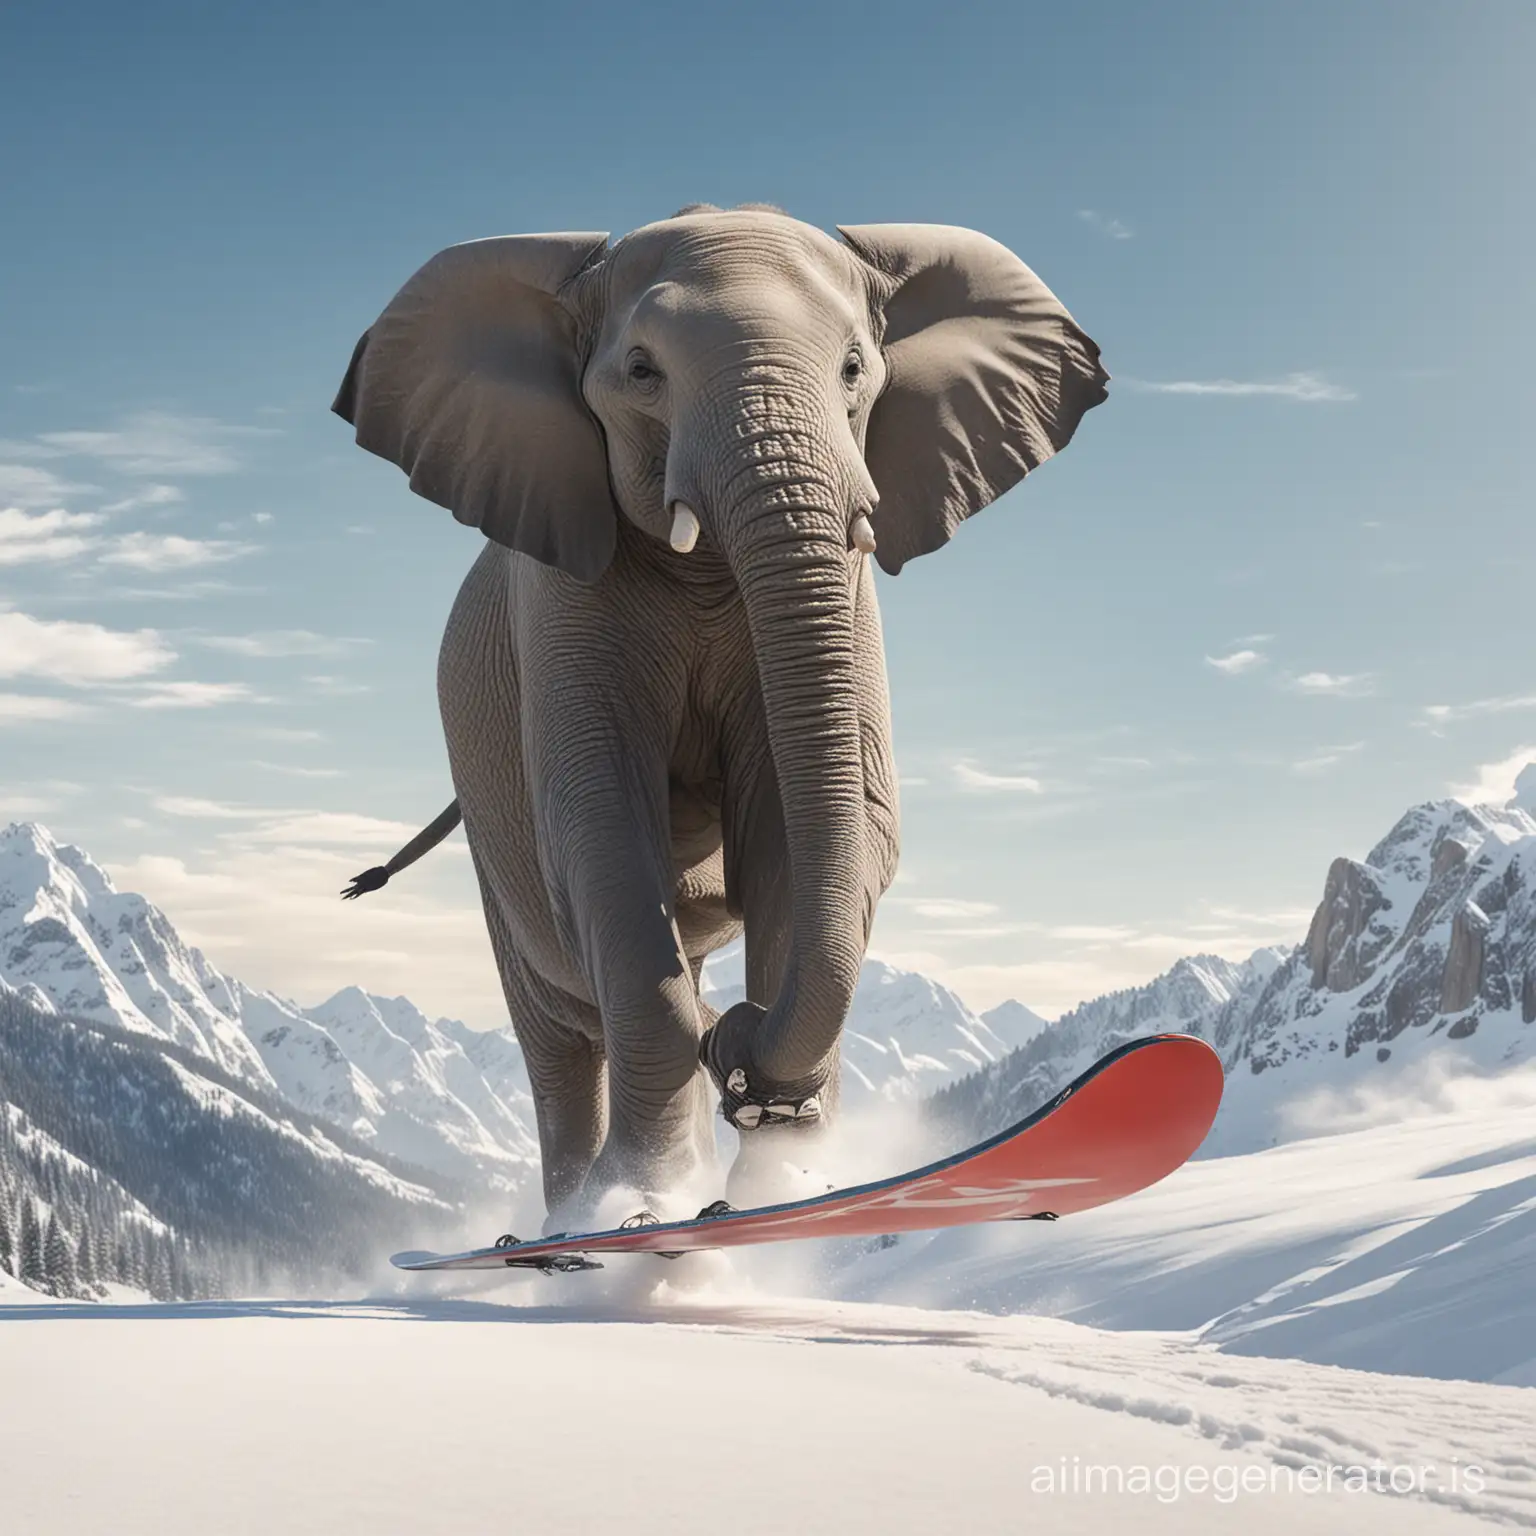 Elephant-Skiing-Adventure-in-Snowy-Wonderland